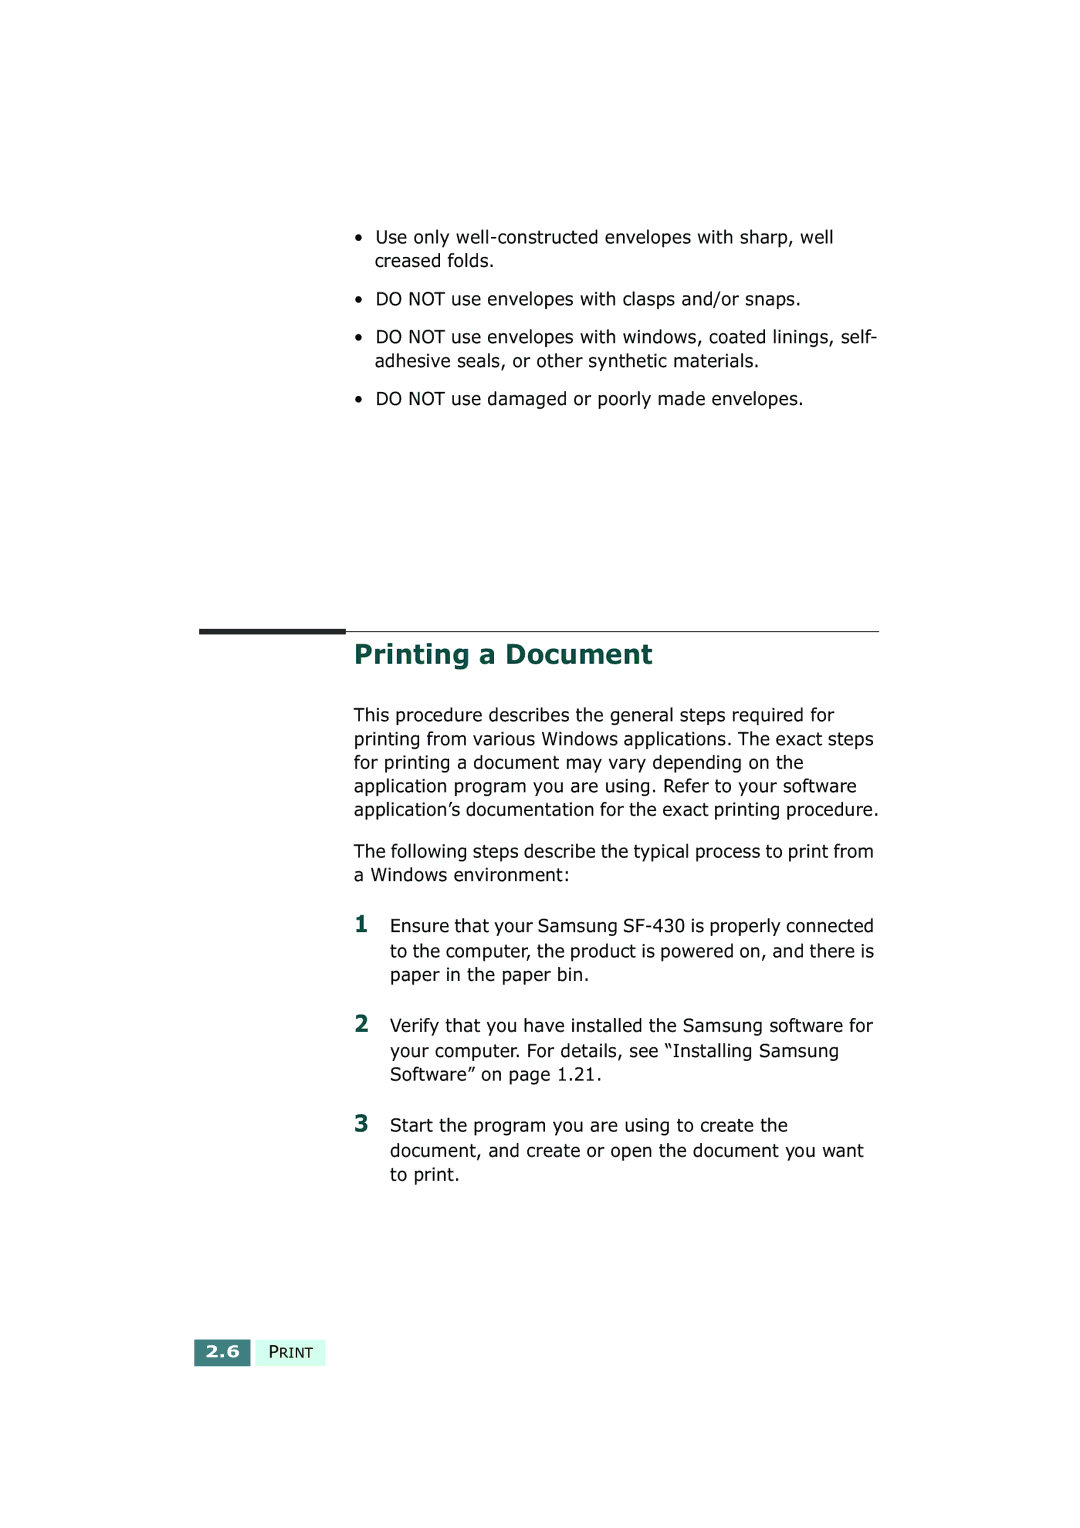 Samsung SF-430 manual Printing a Document 